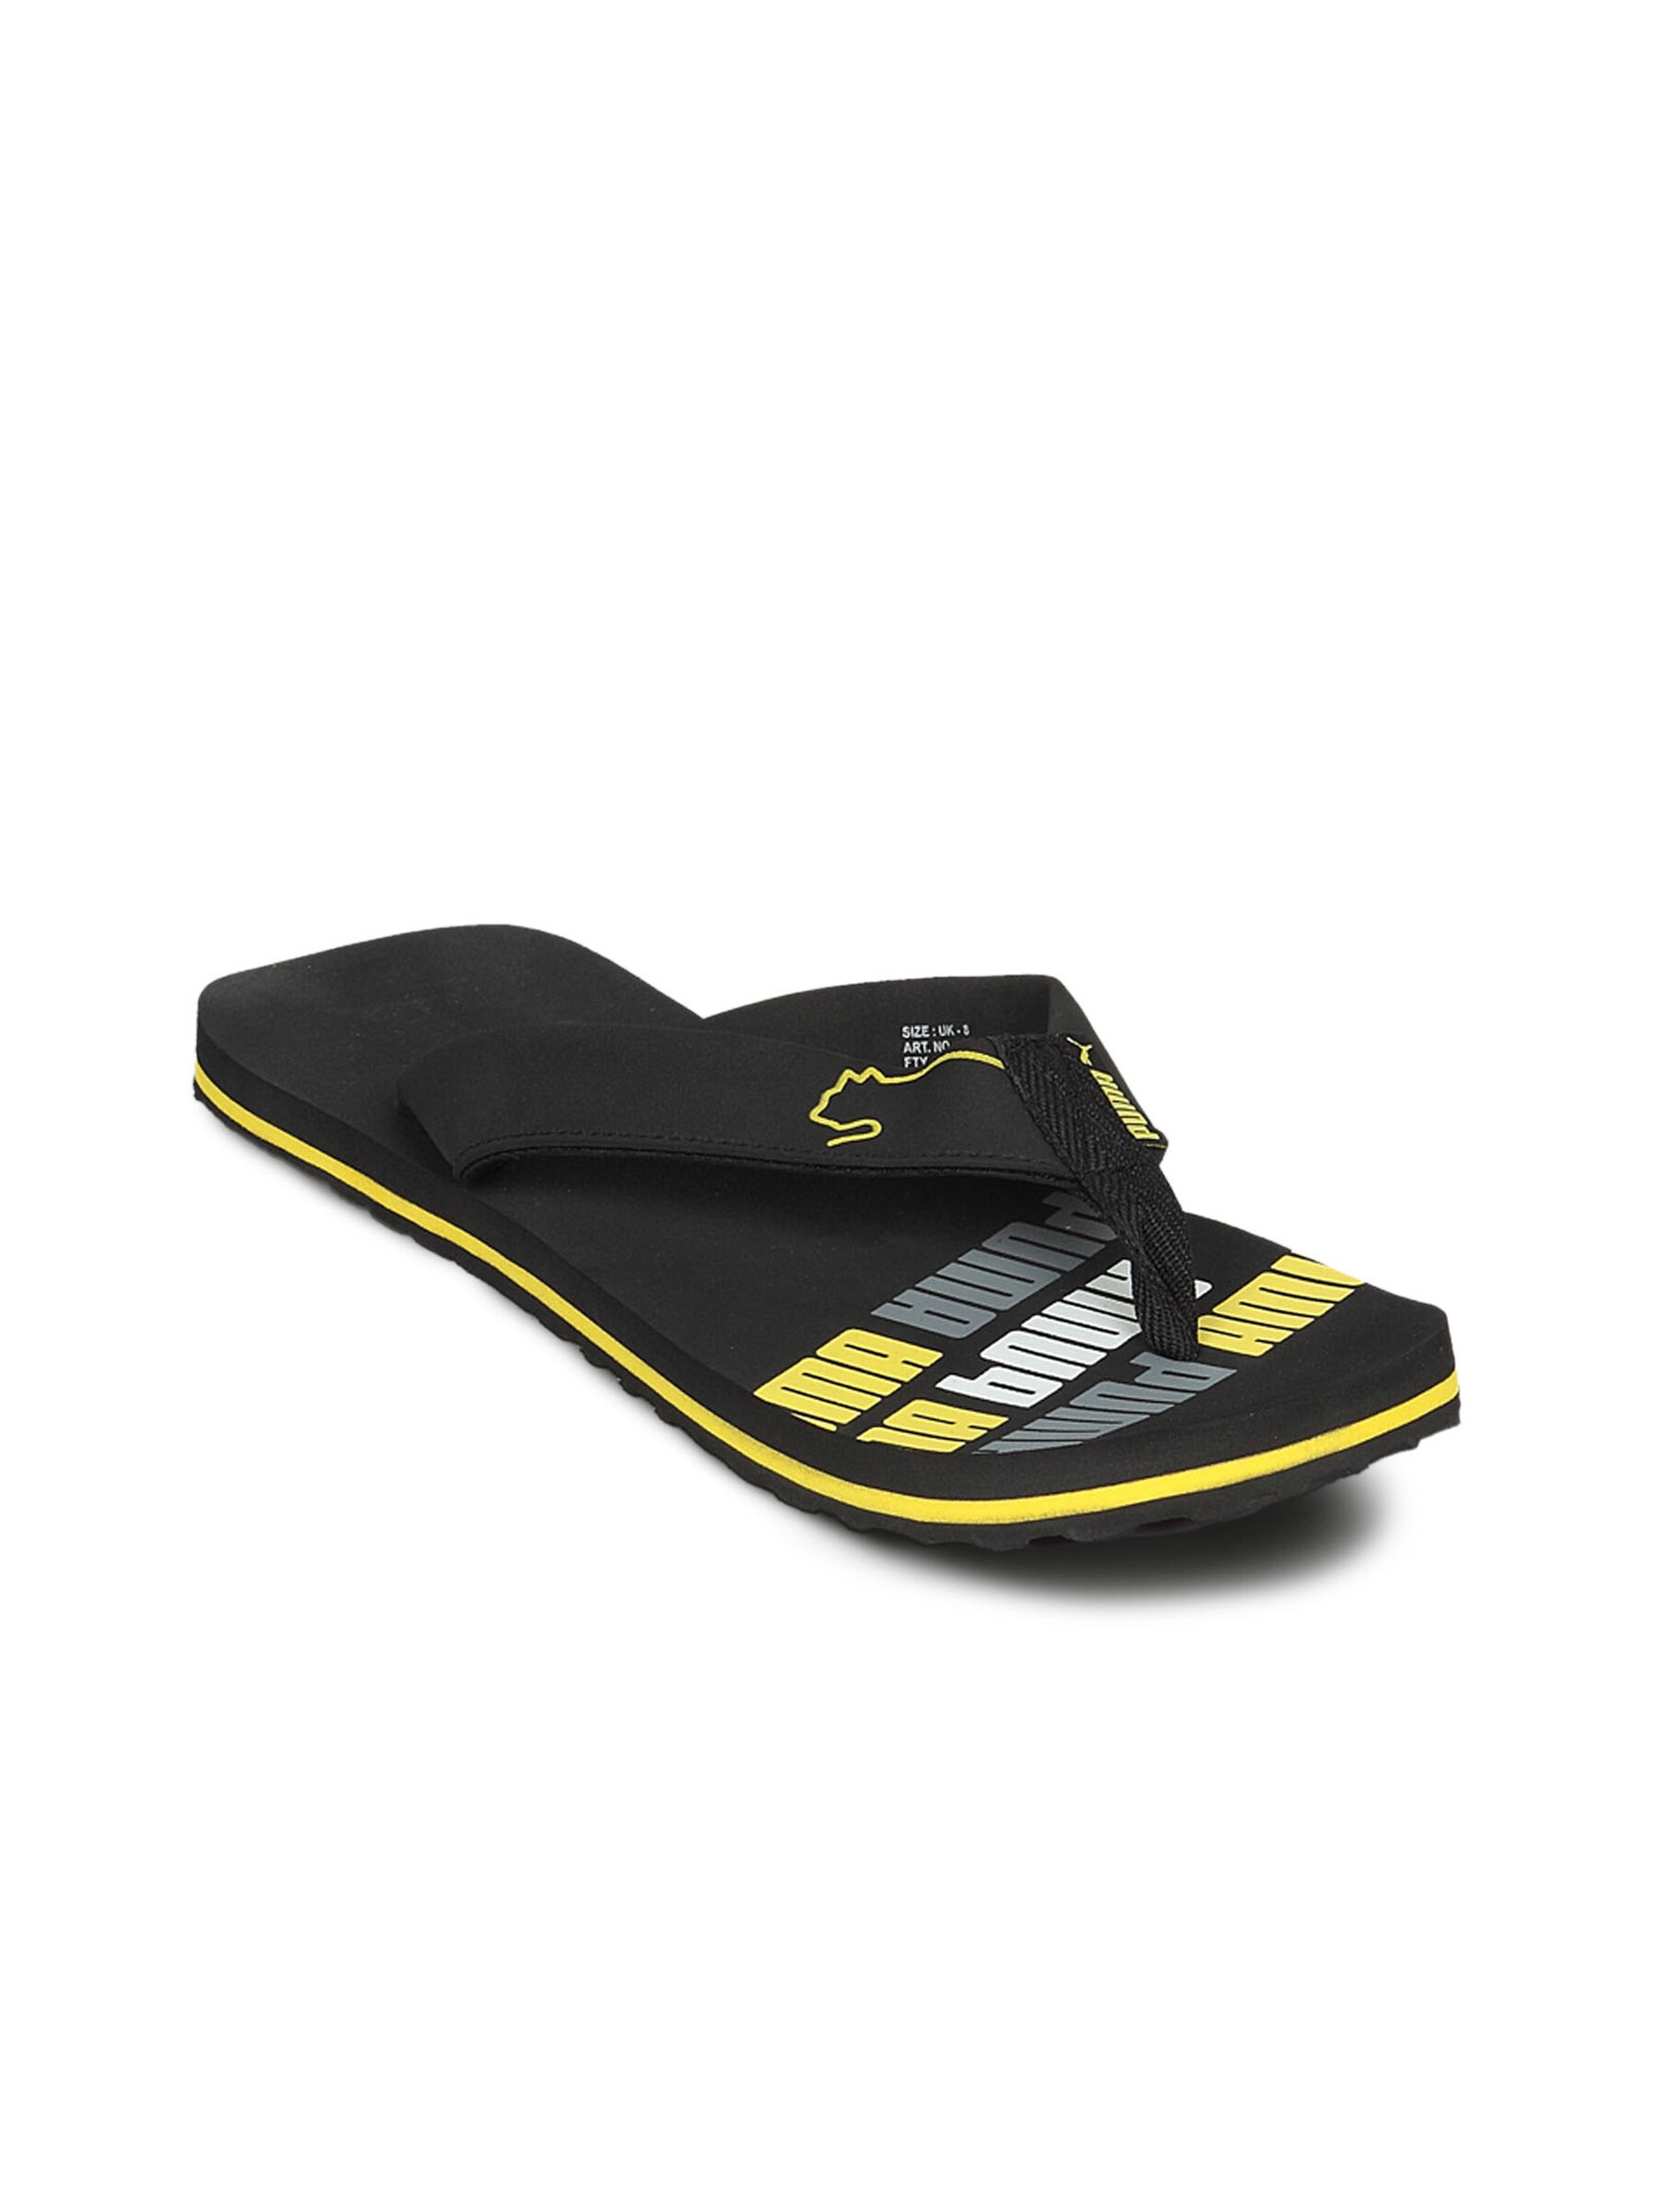 Puma Unisex Issac Black Yellow Flip Flop